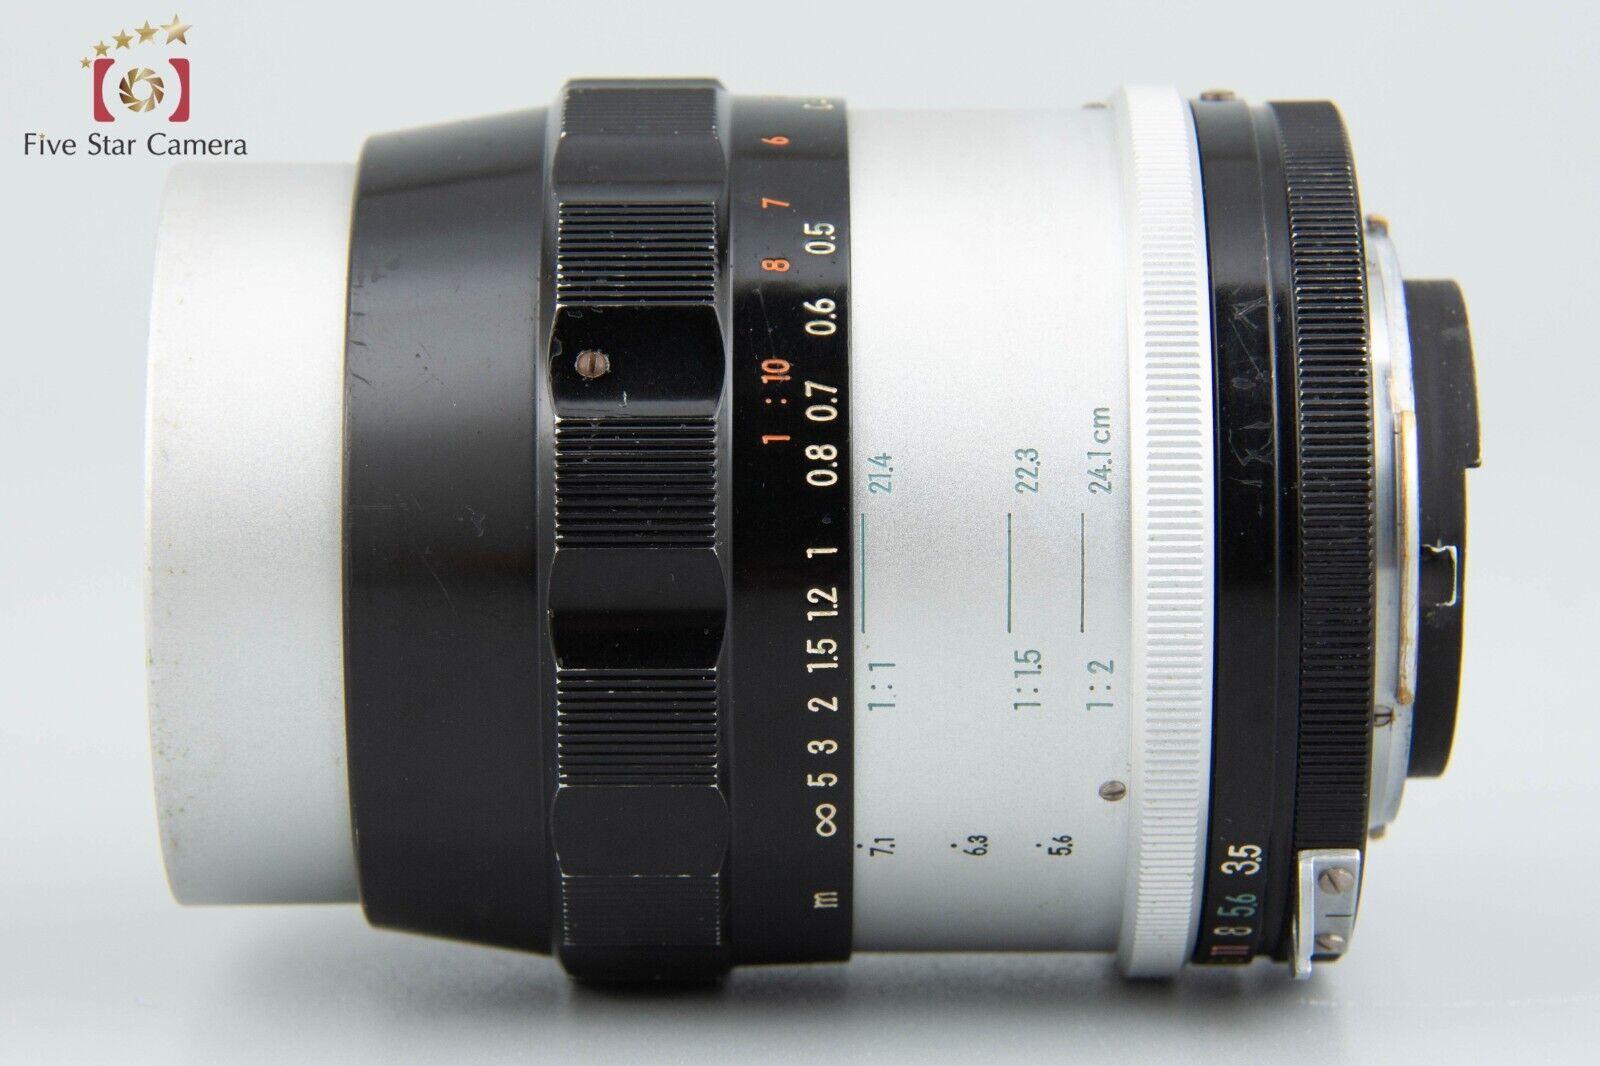 Nikon Micro-Nikkor Auto 55mm f/3.5